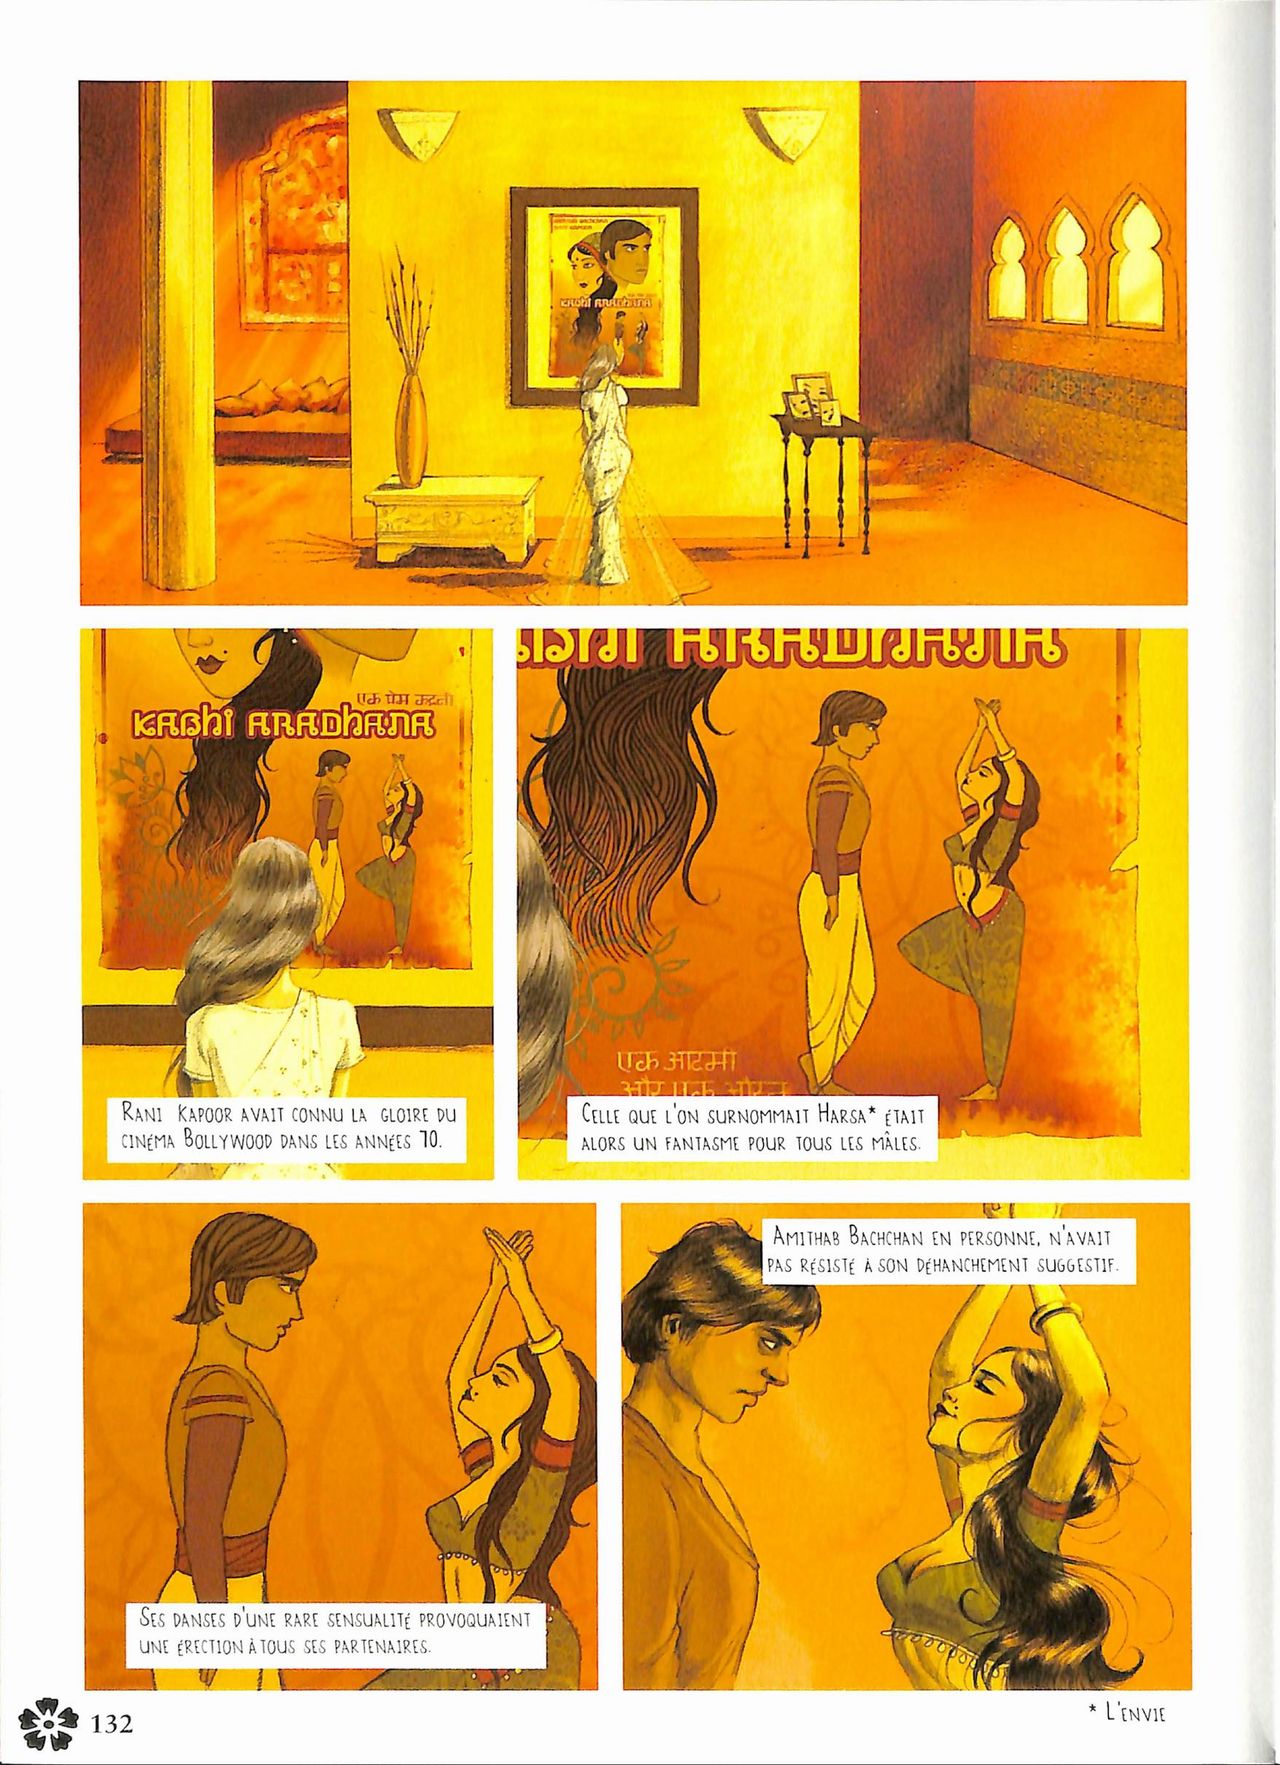 Kama Sutra en bandes dessinées - Kama Sutra with Comics numero d'image 132